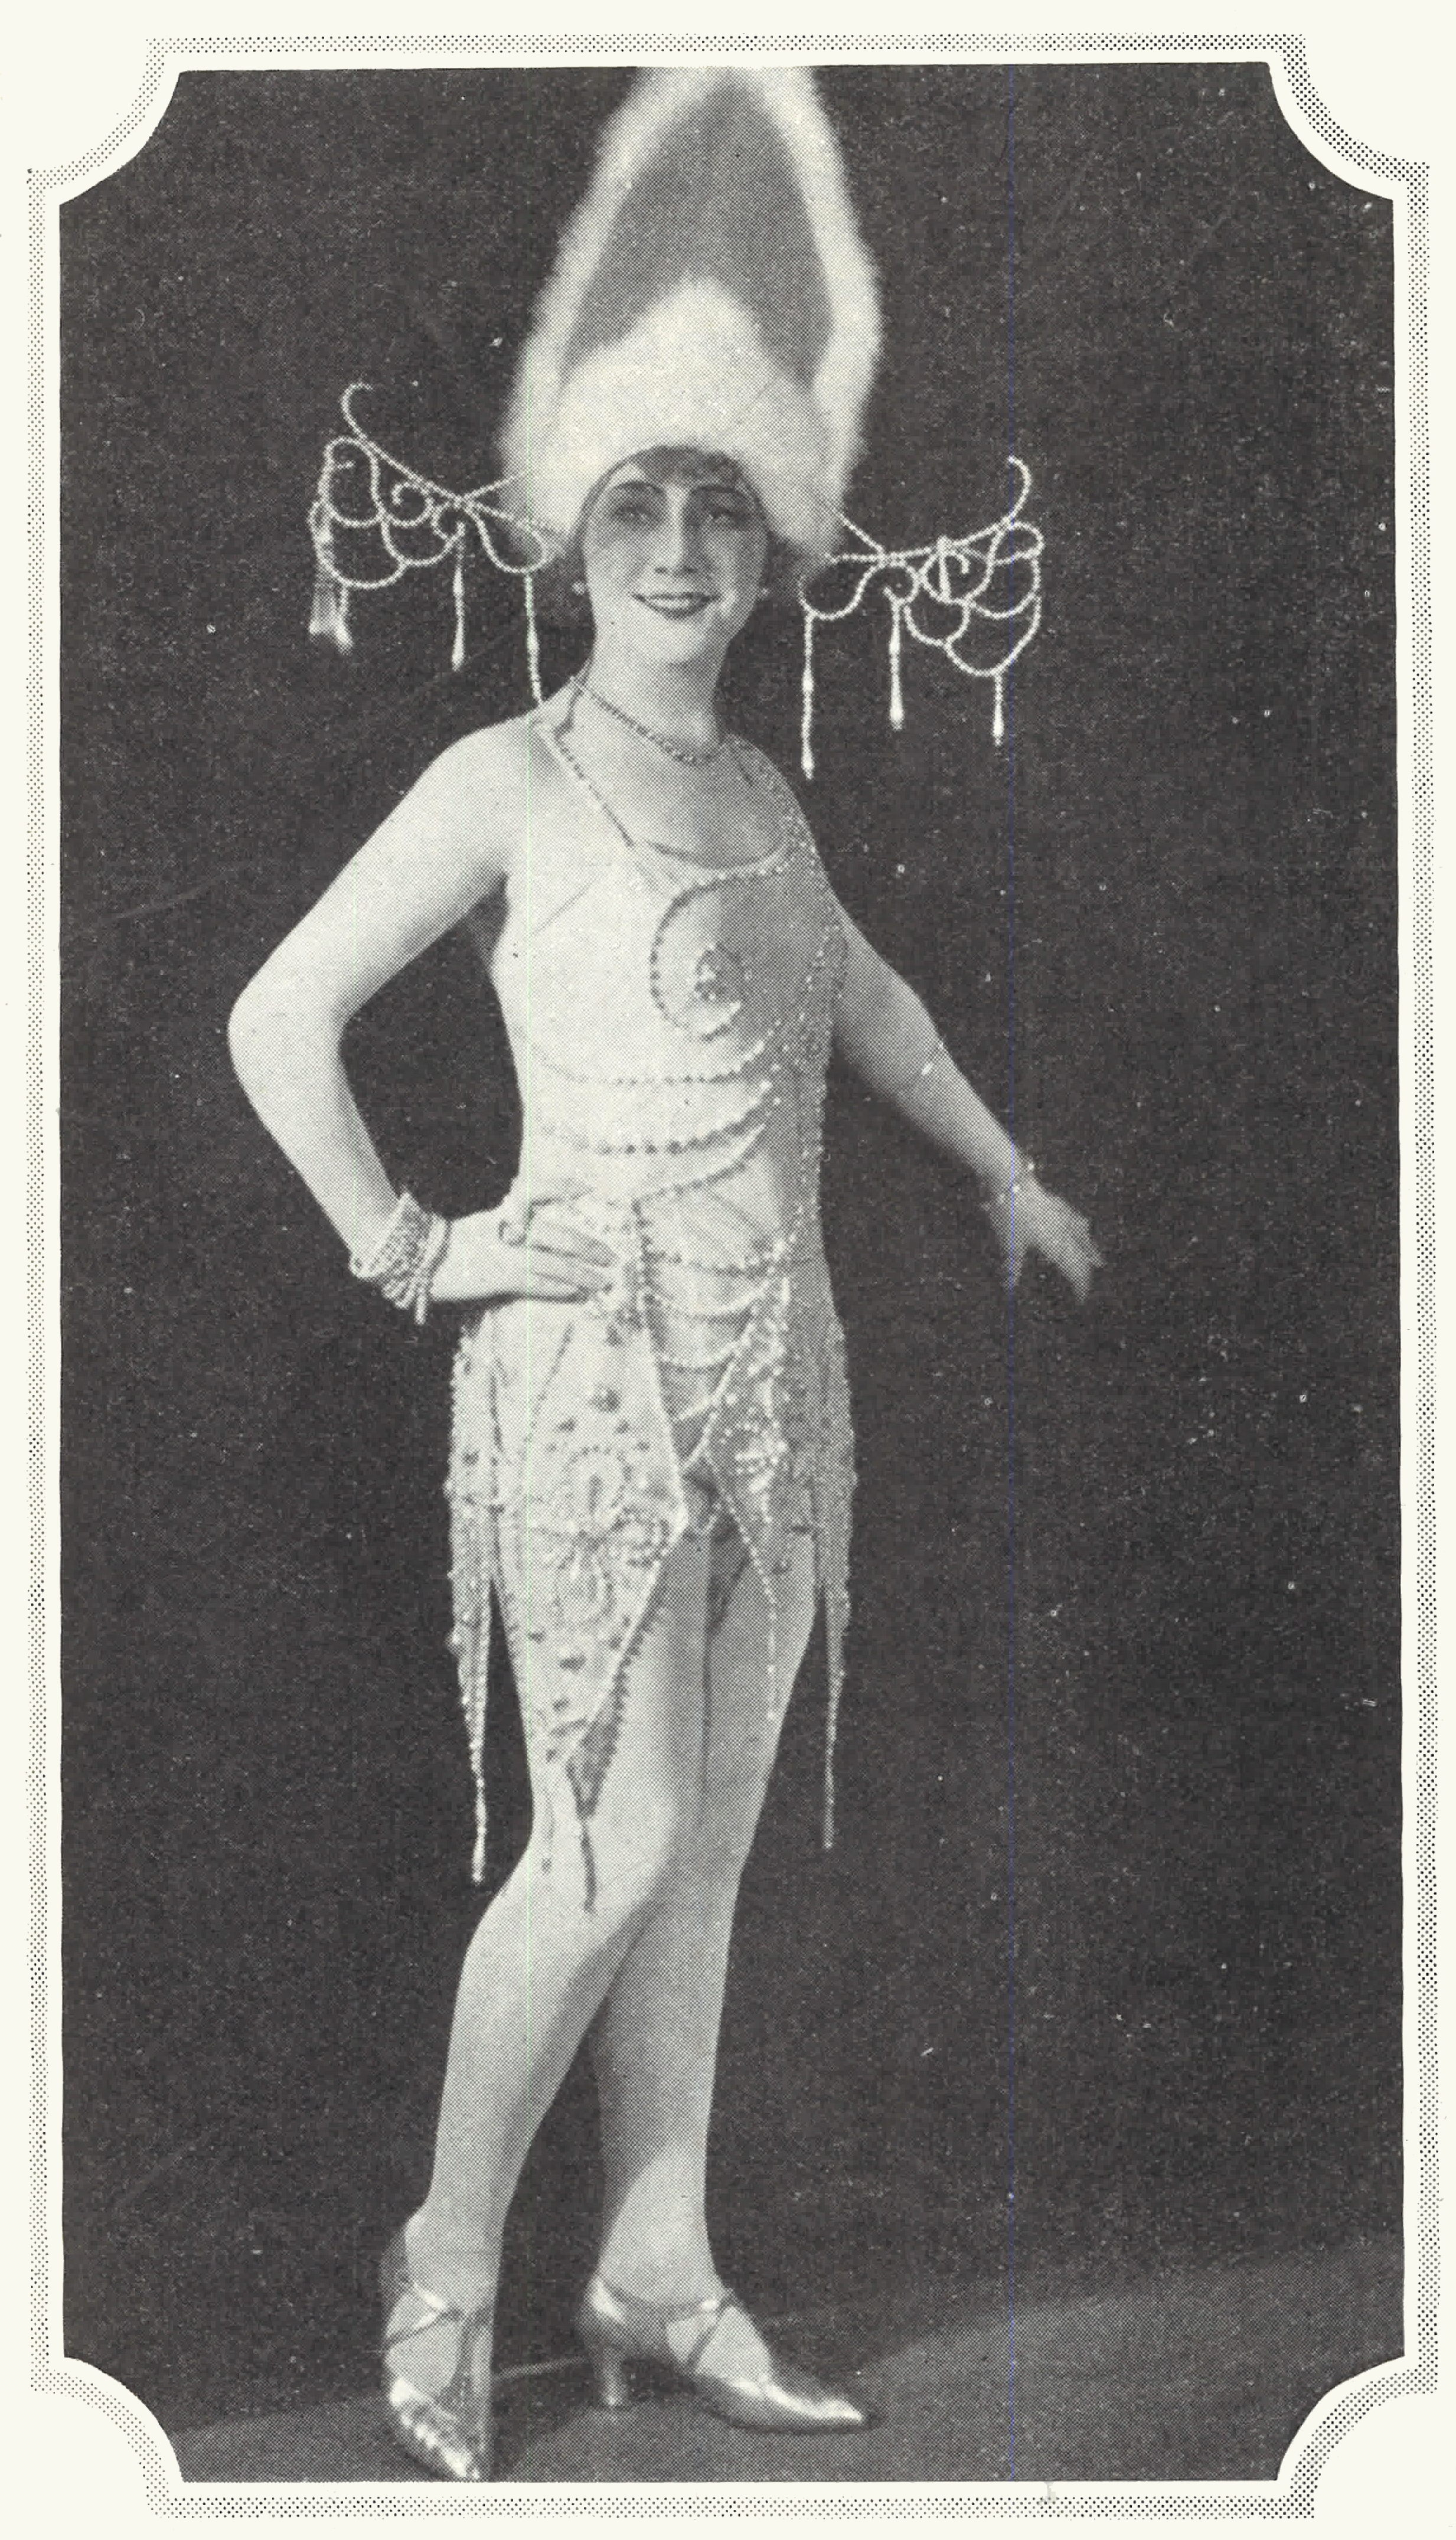 Nita Hårleman in scene costume, image from the magazine Scenen, nr 12, 1929. Photographer unknown